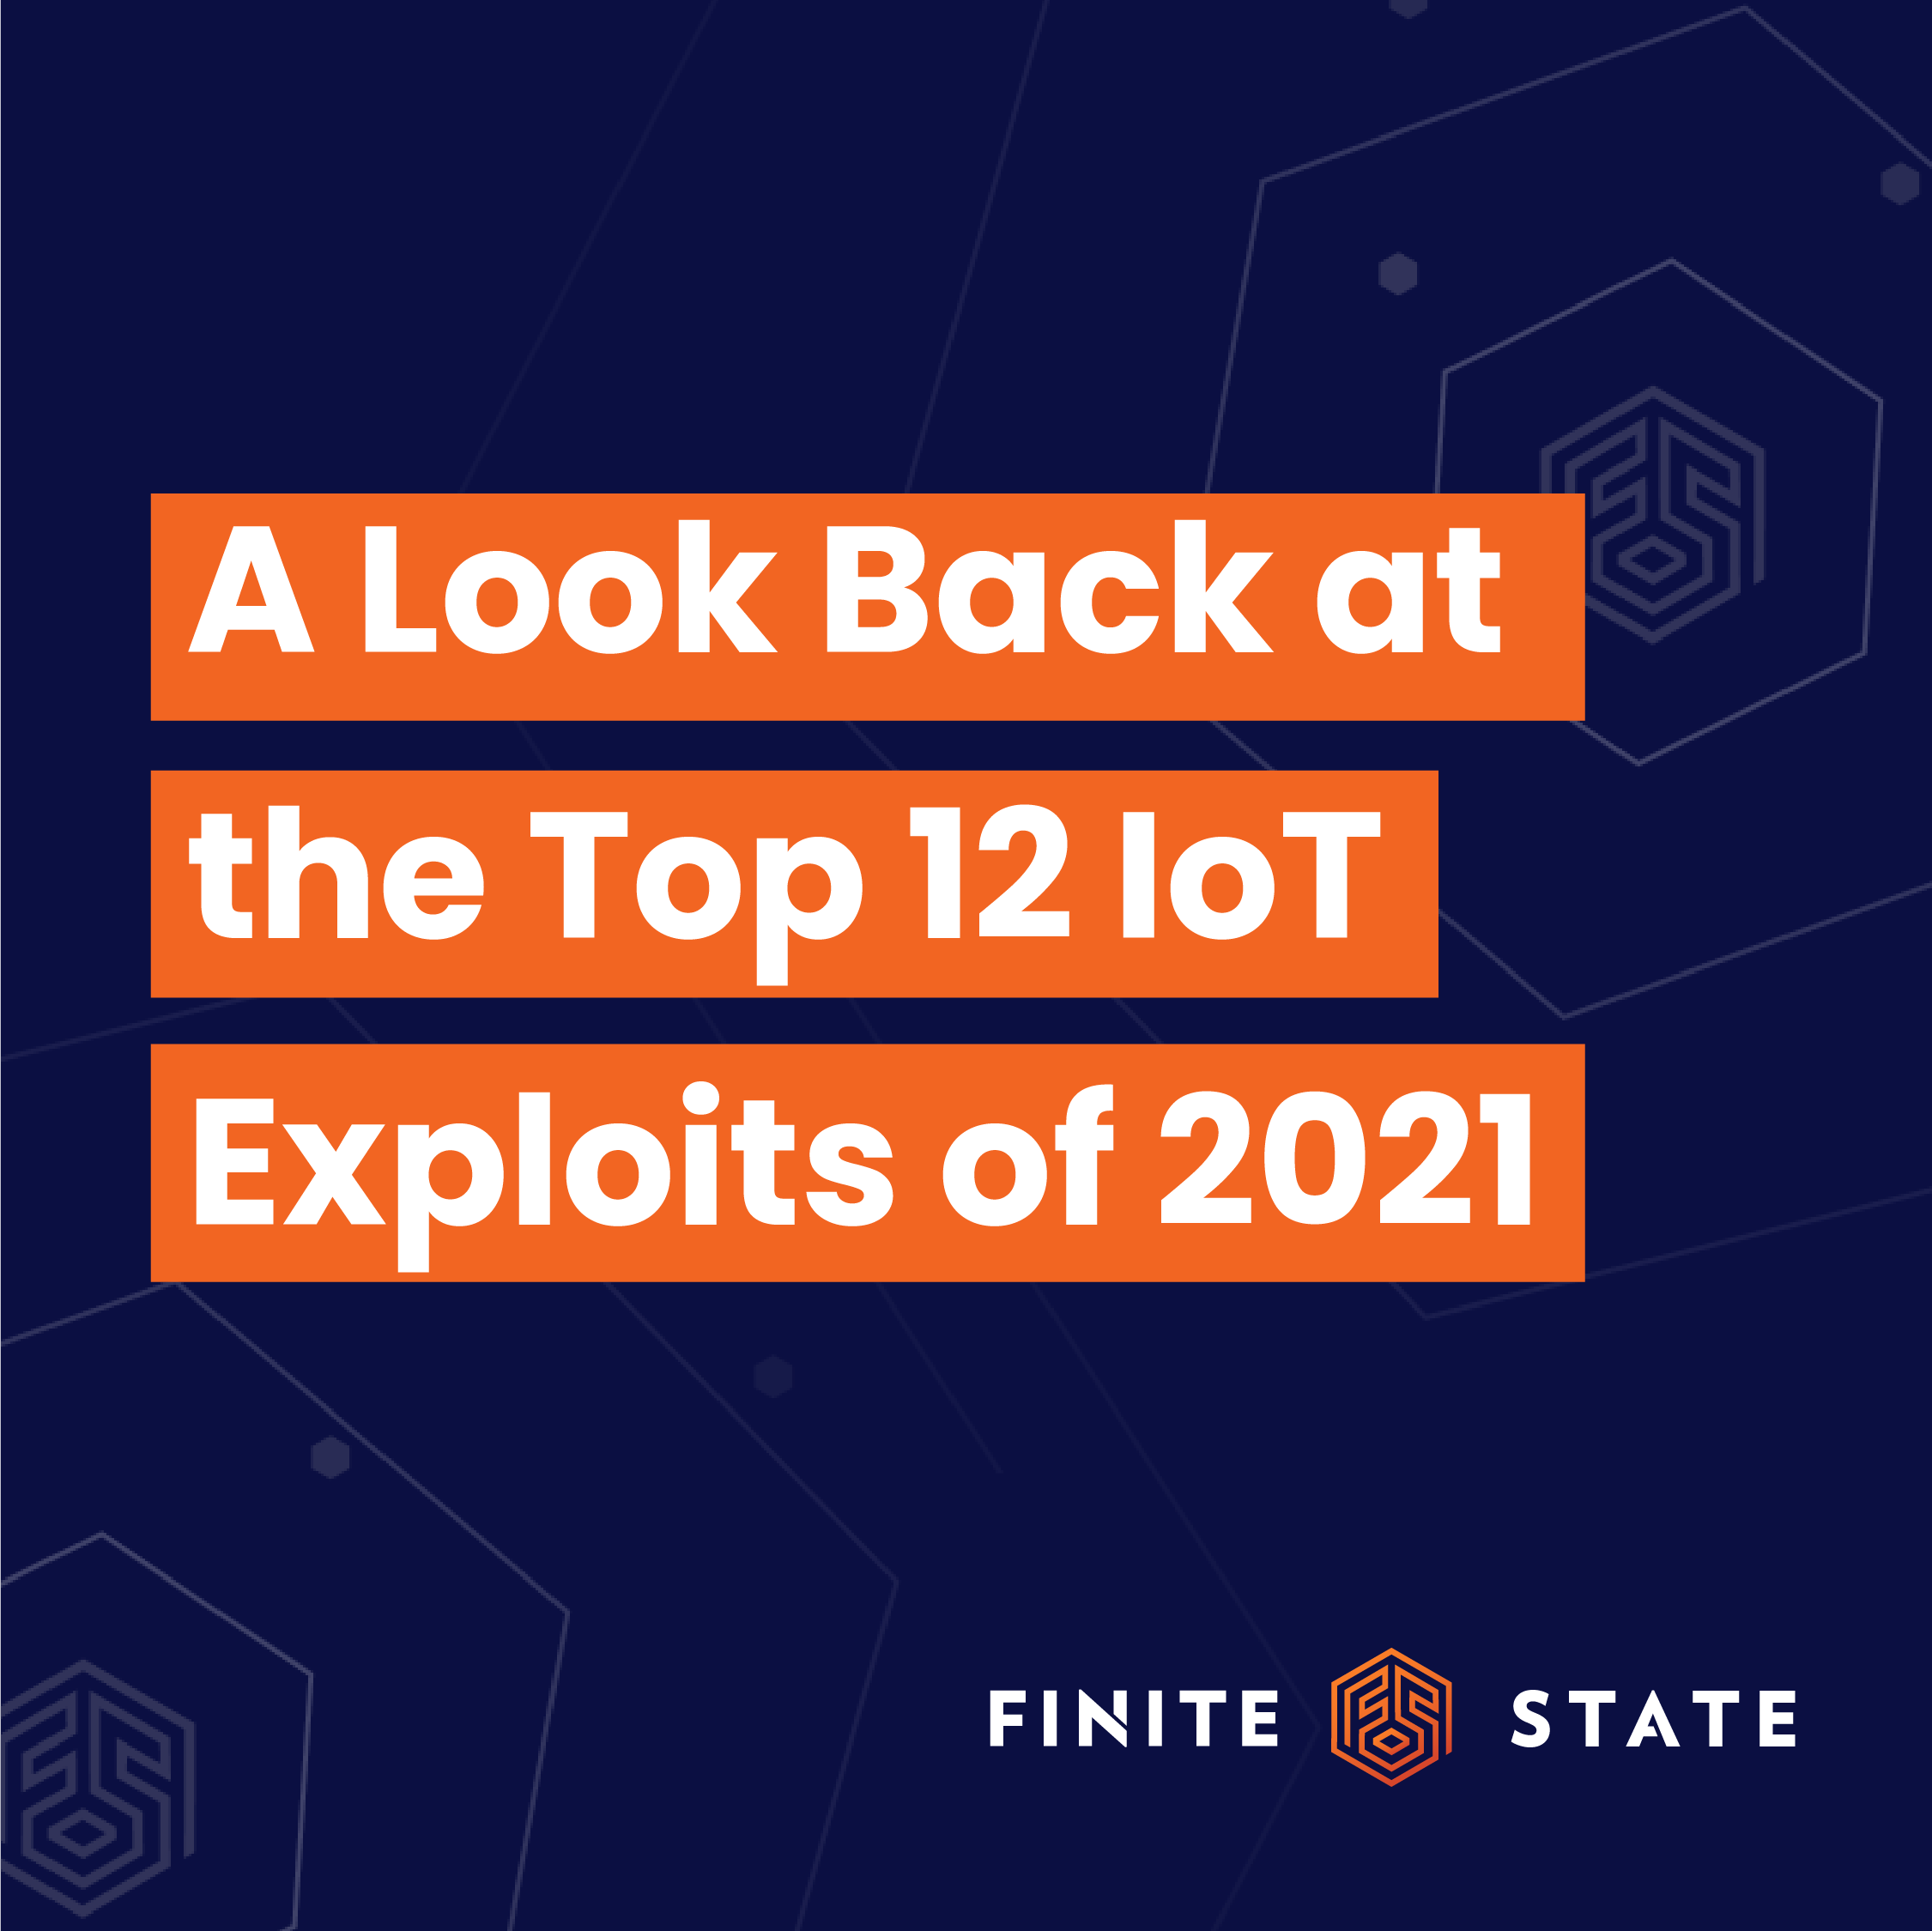 Top 12 IoT Exploits of 2021